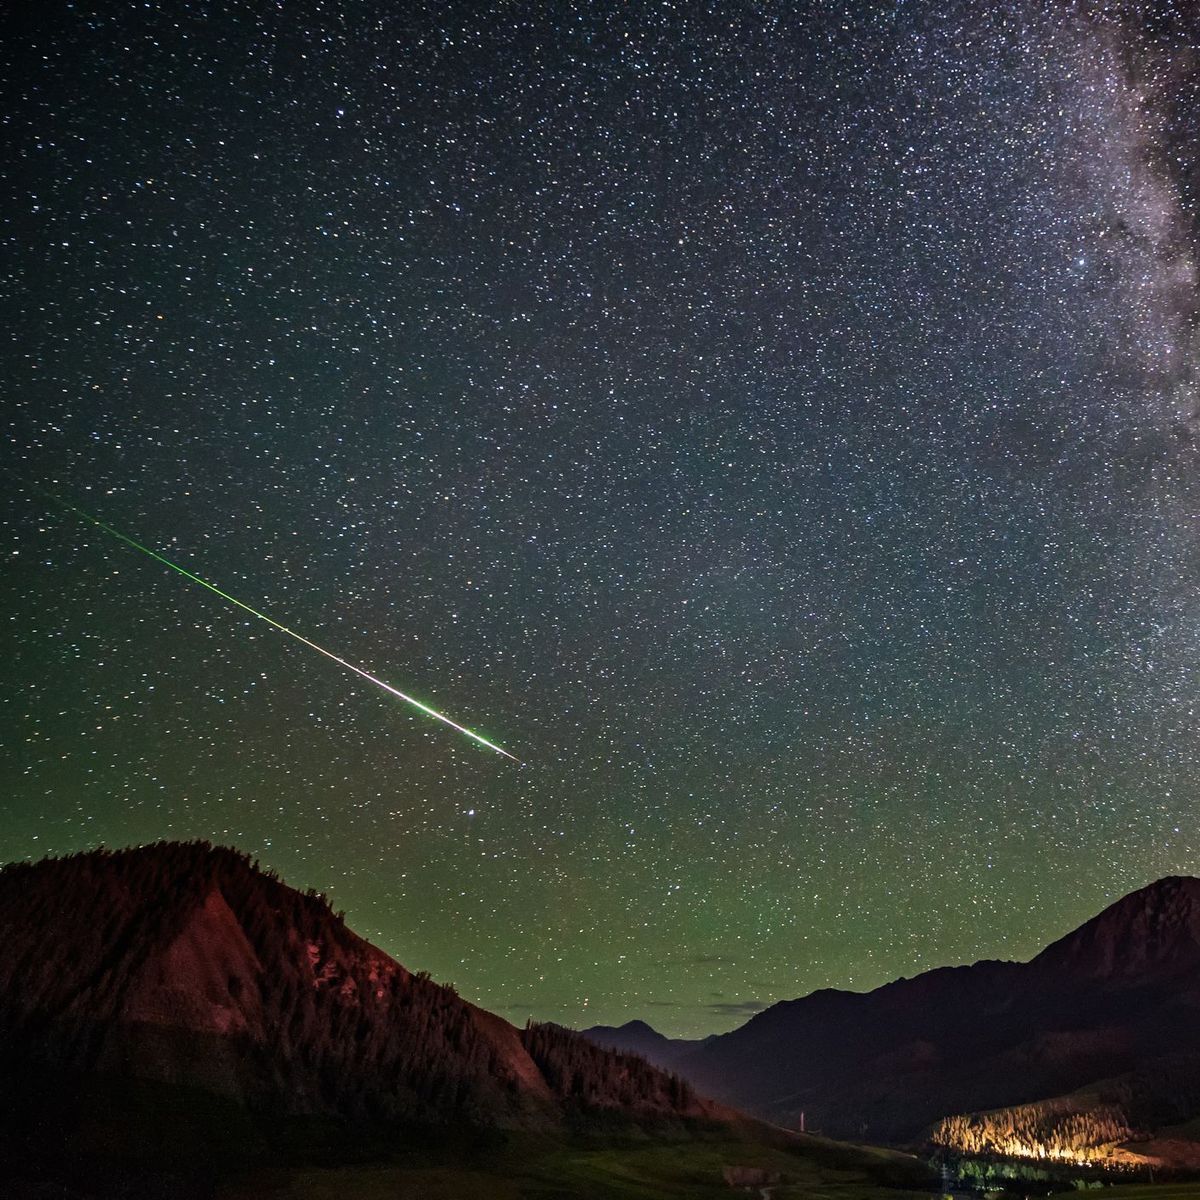 meteor streaking across night sky